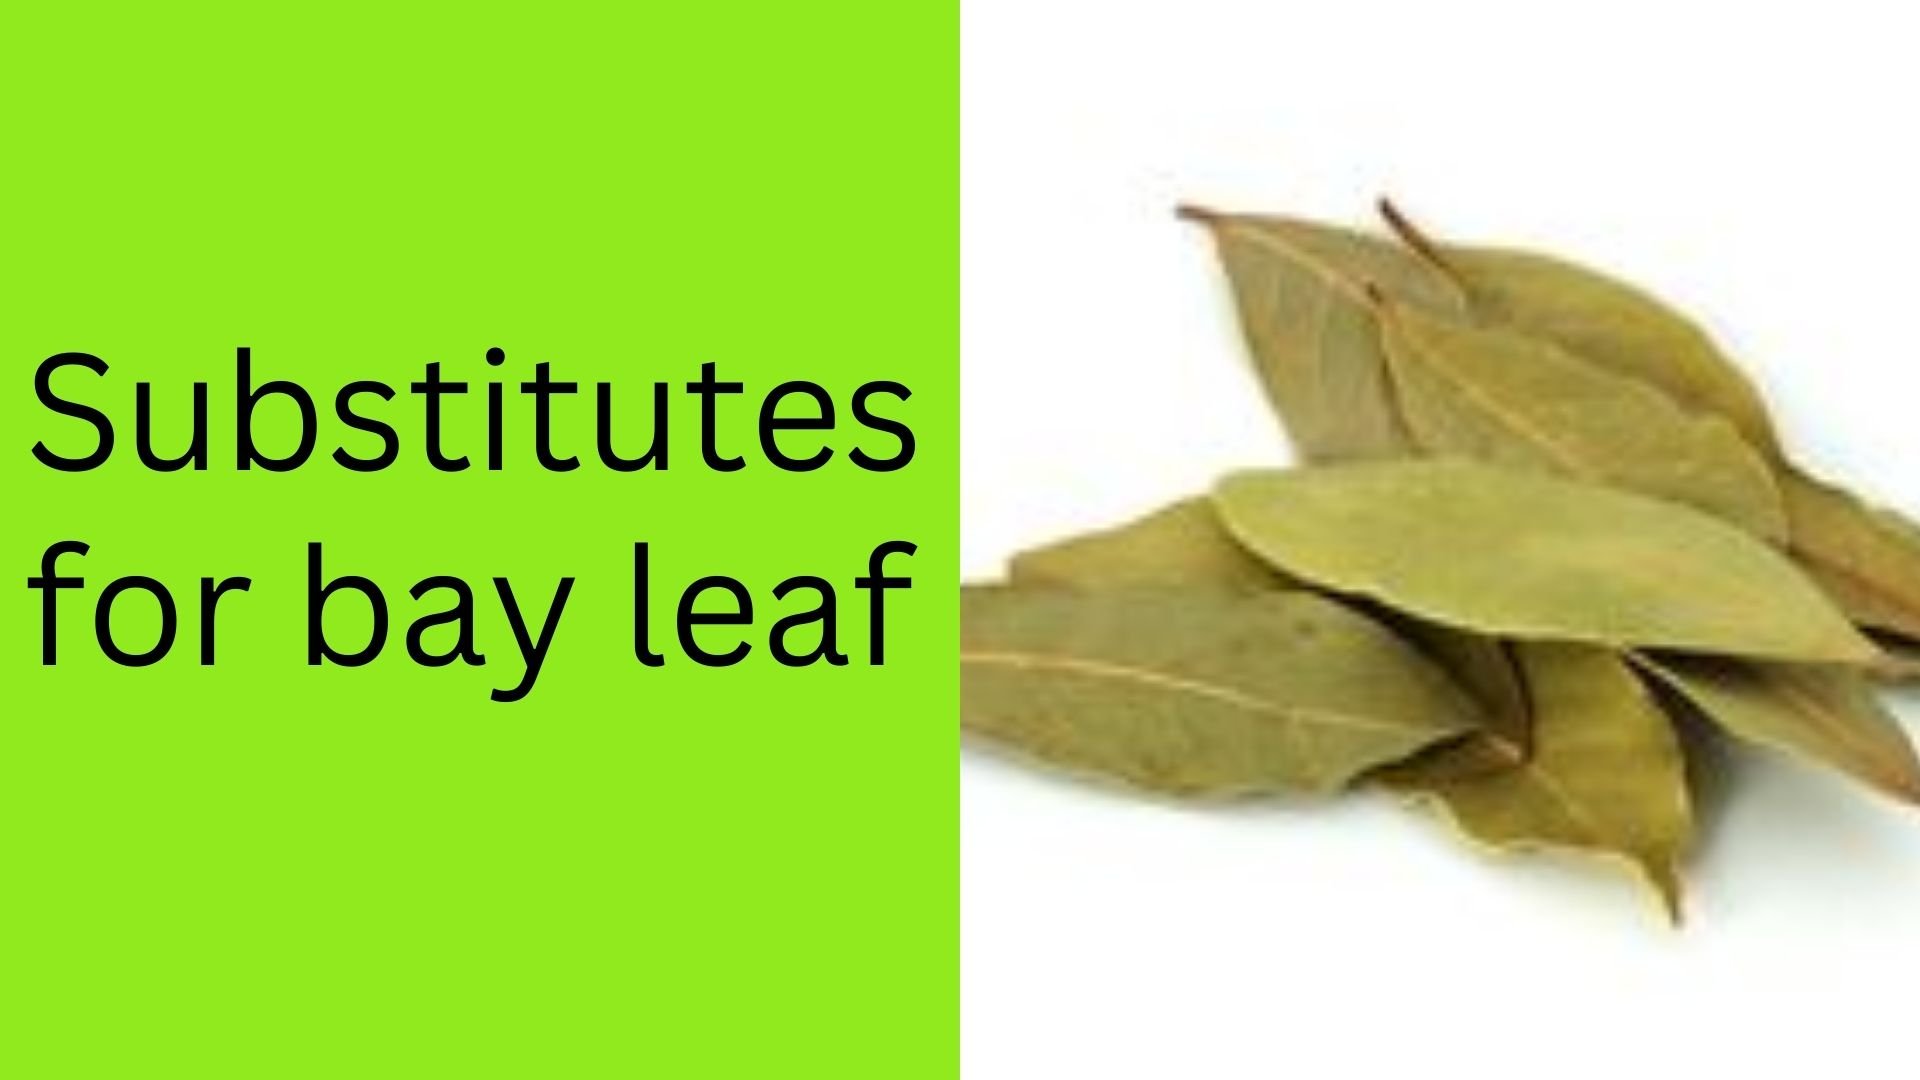 Substitutes for bay leaf